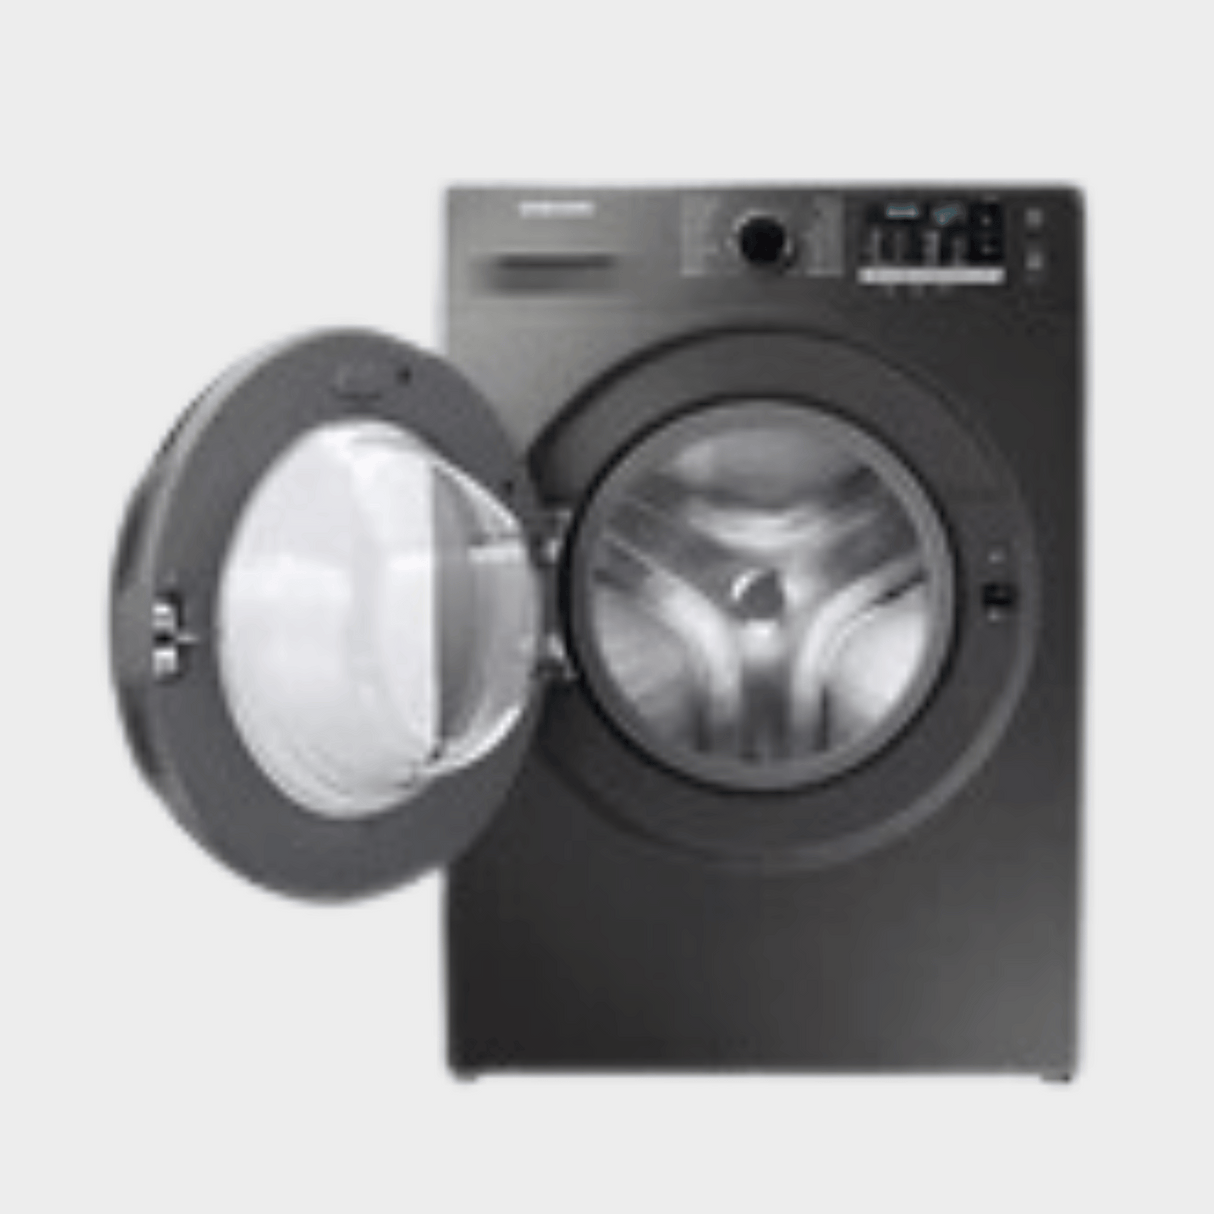 Samsung 8kg Front-Load Washing Machine with Eco Bubble WW80 J5260GX